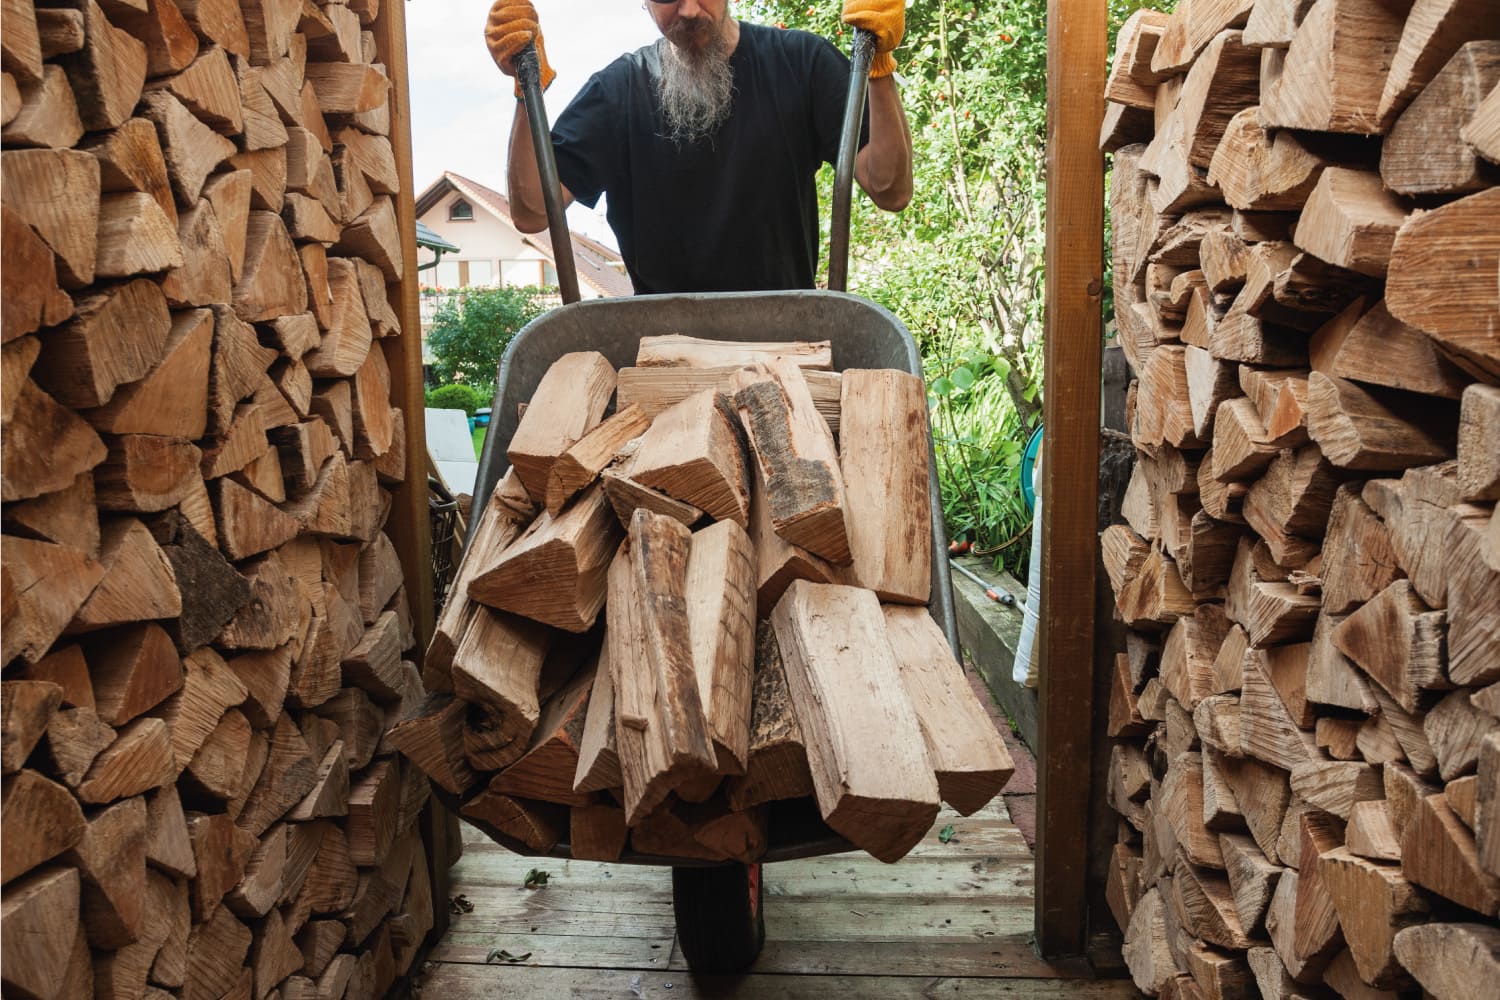 Mid adult man unloading wheelbarrow full of firewoods